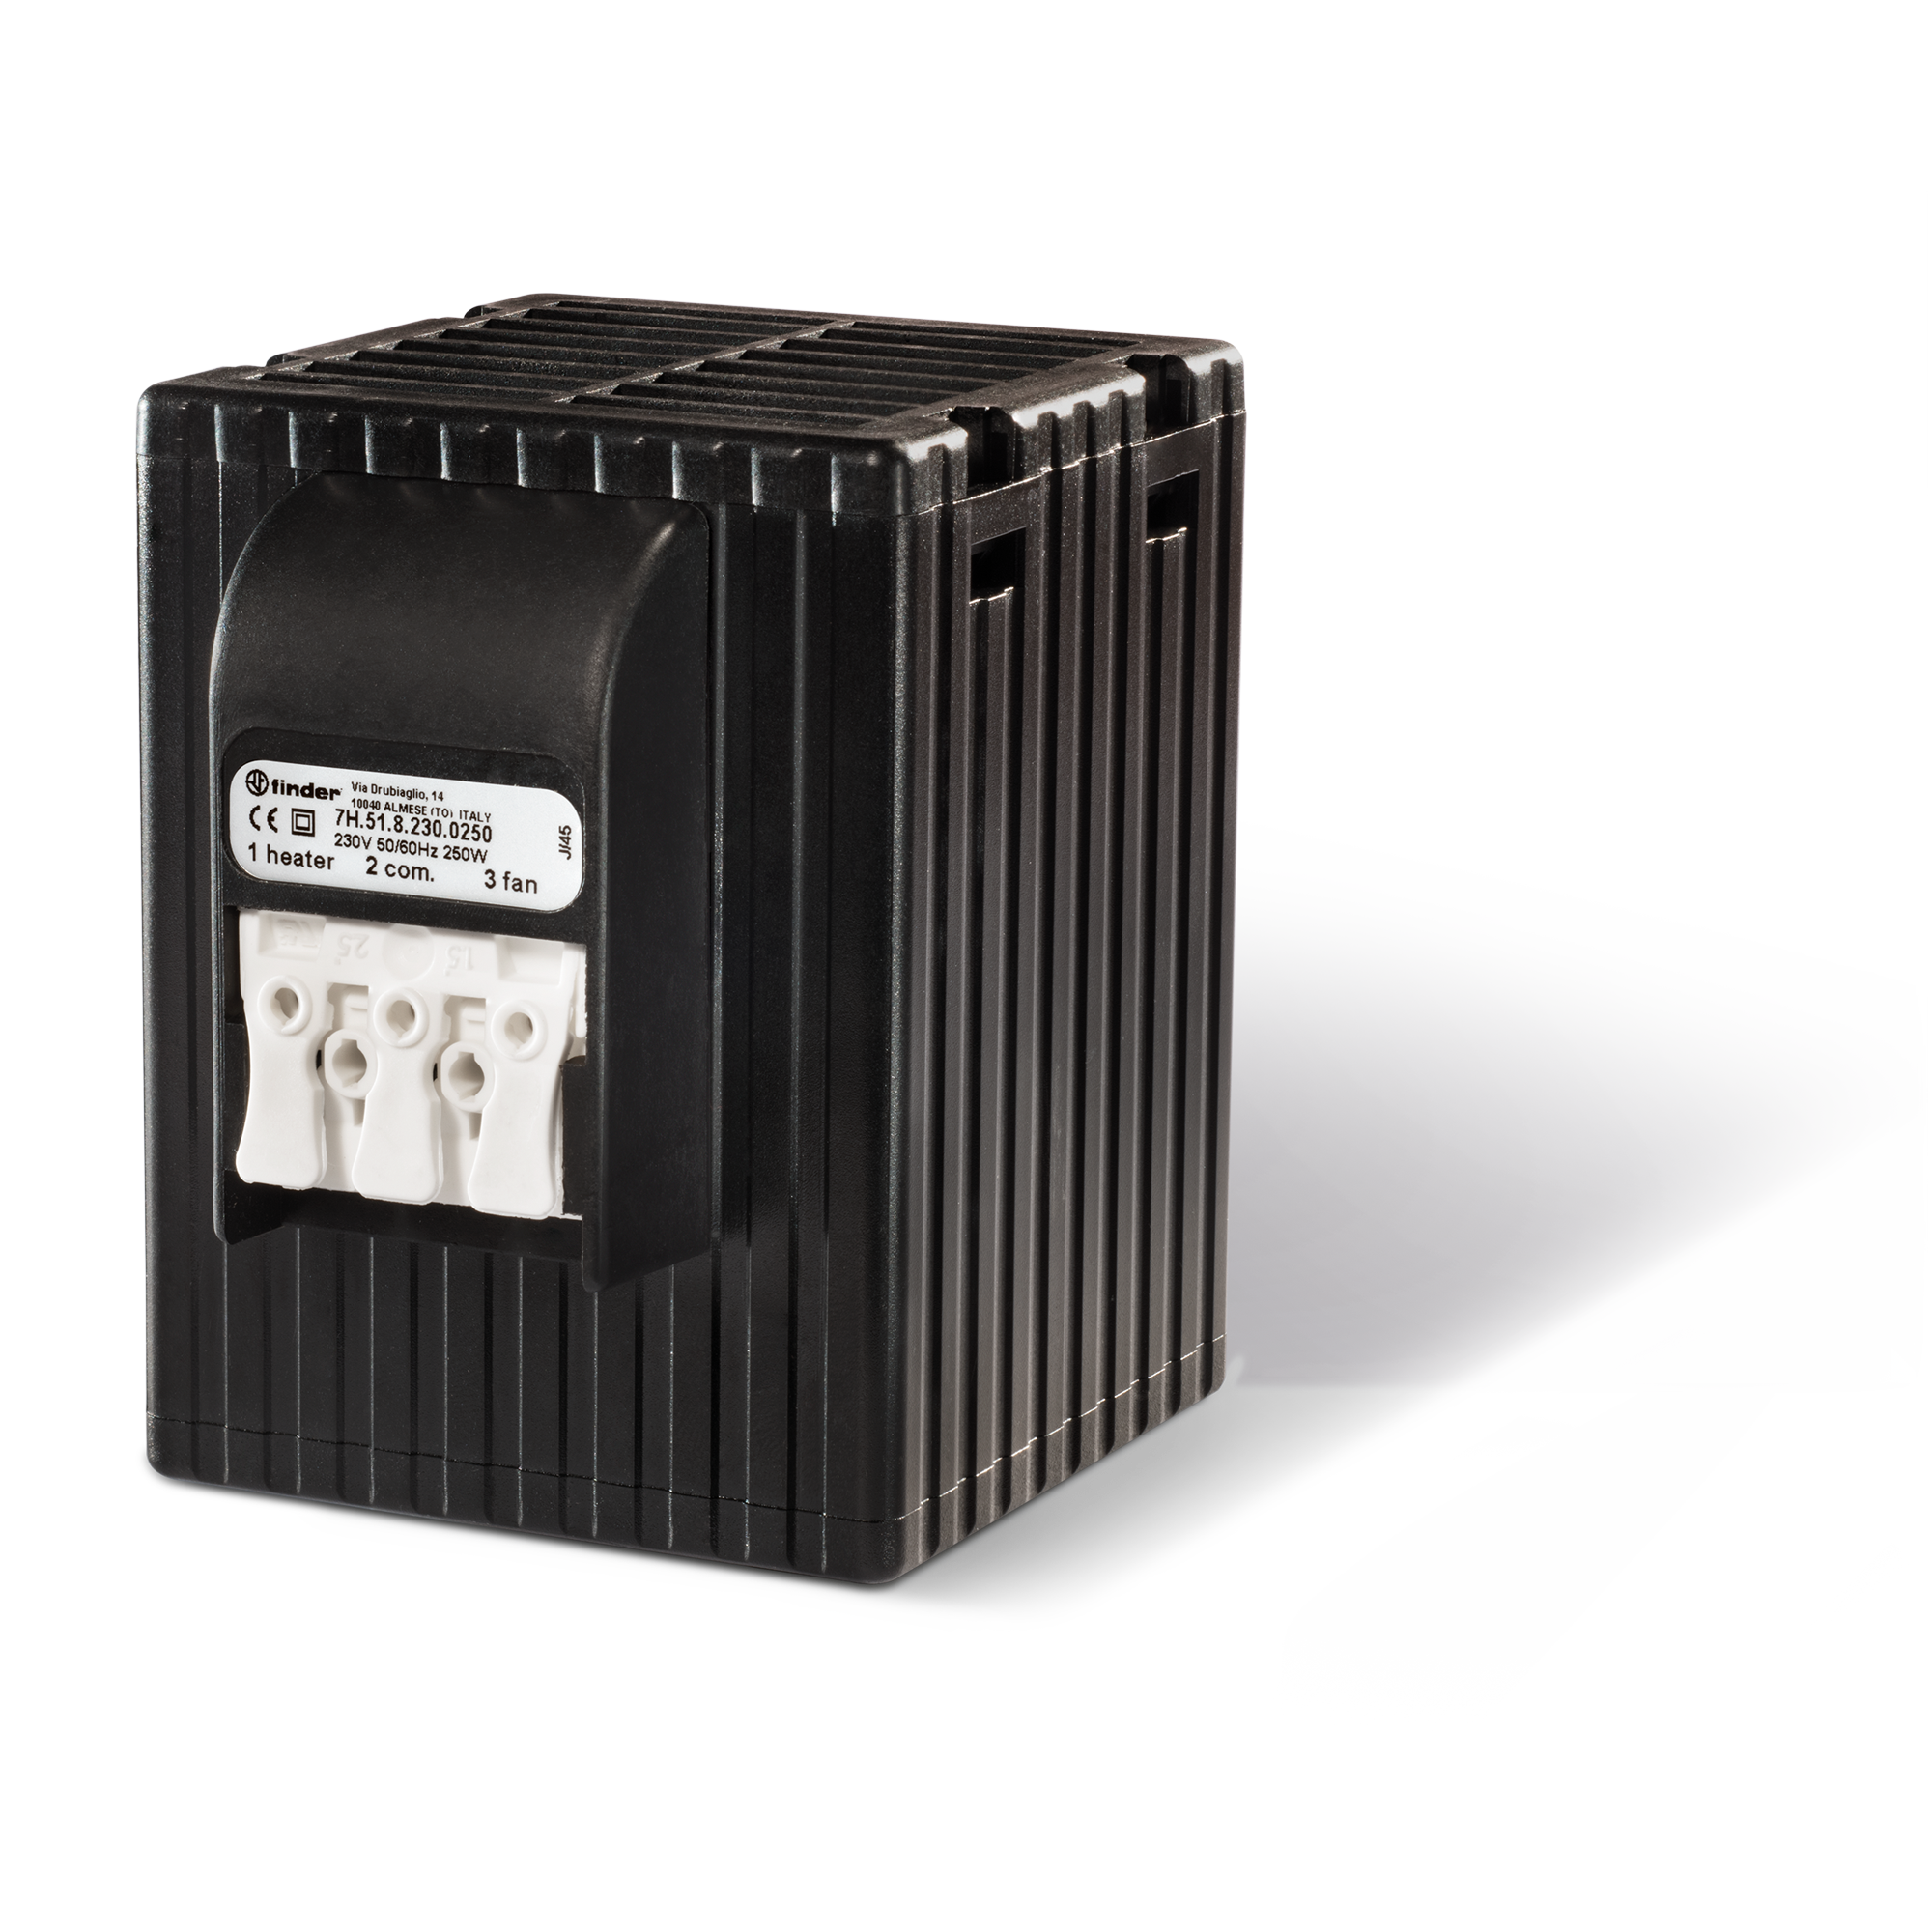 7H5102300025 - Finder 7H Series Panel Heater - 25 W - 100...230 VAC/DC